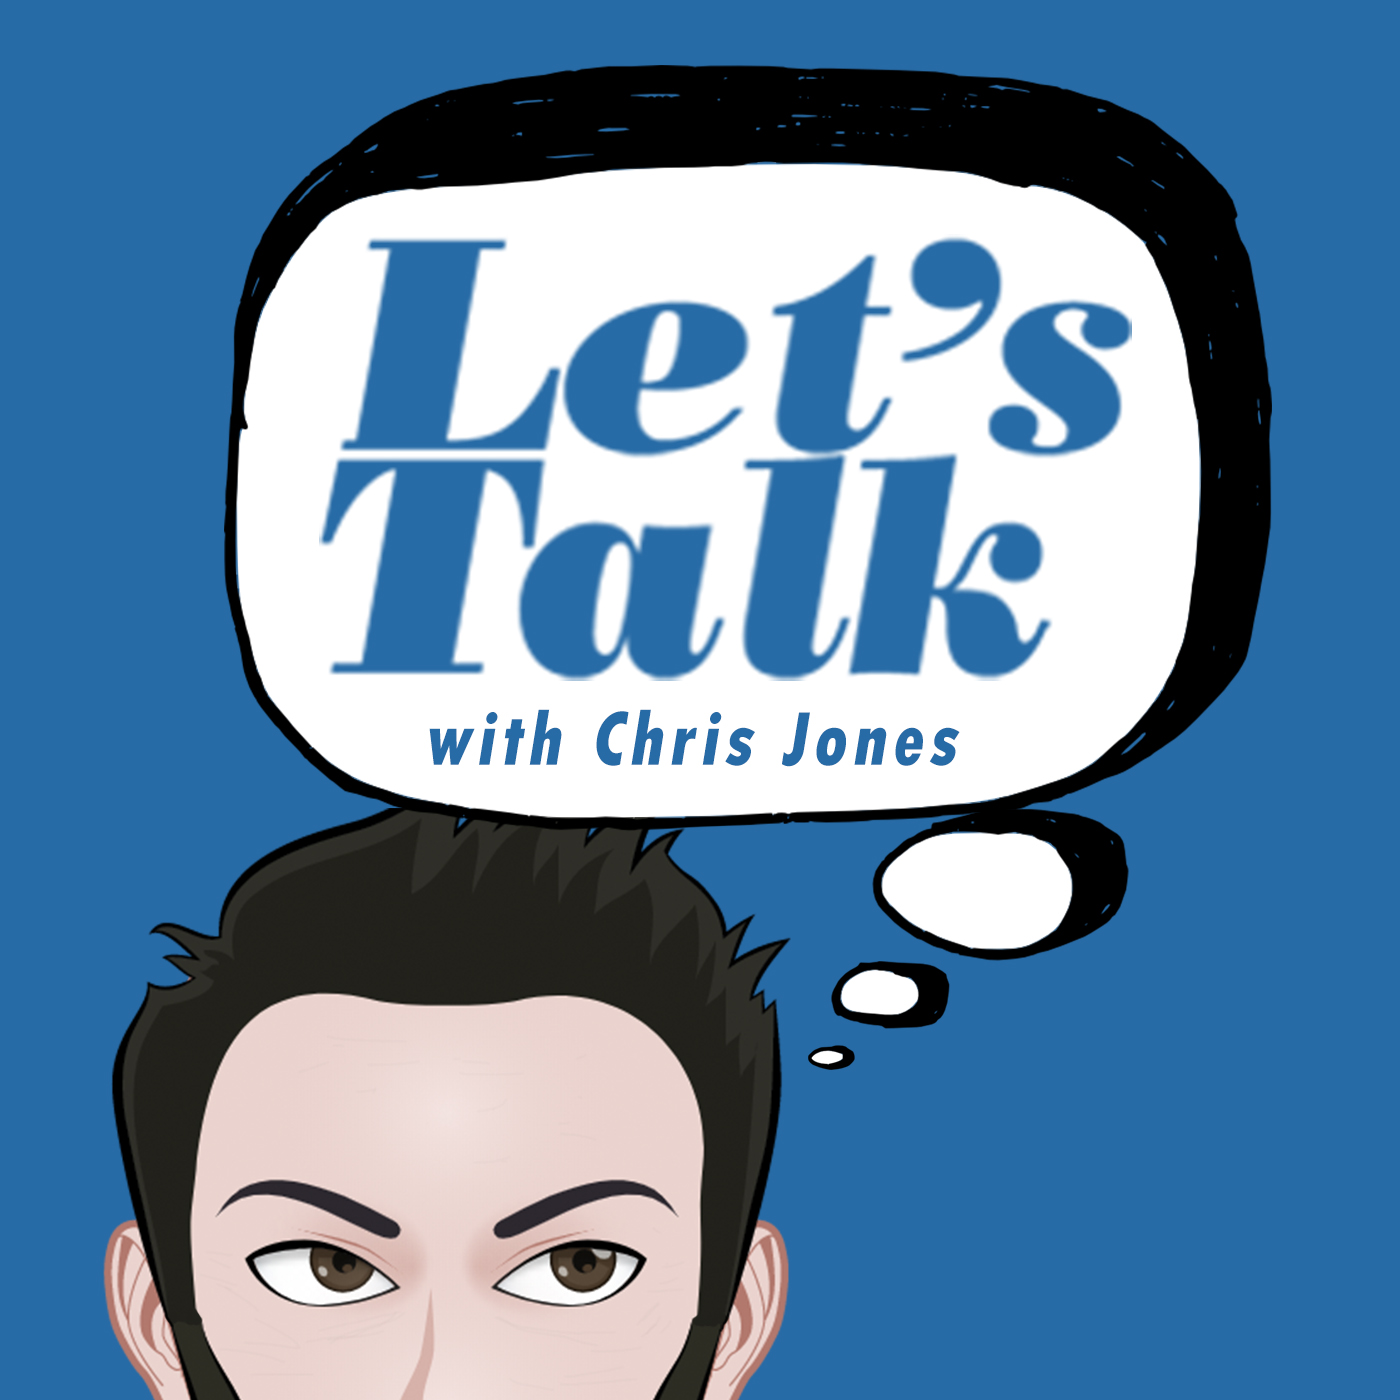 Chris Jones Best Bits Podcast